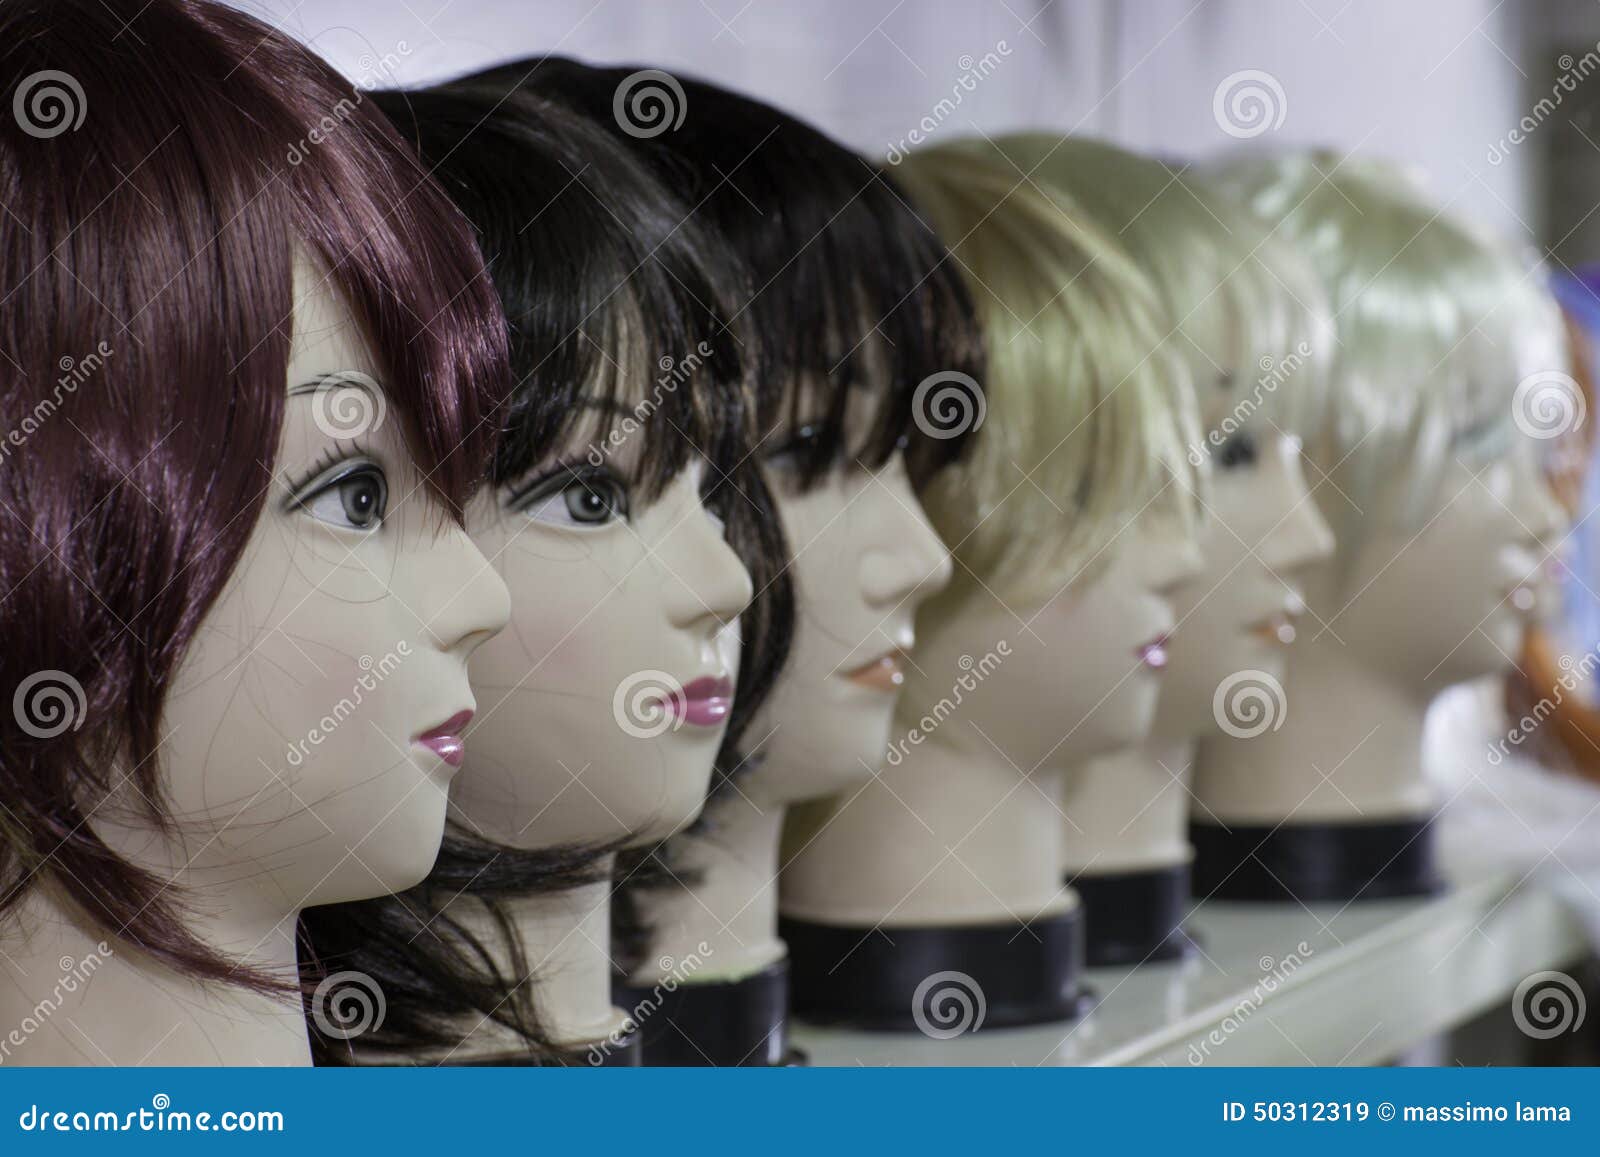 mannequins